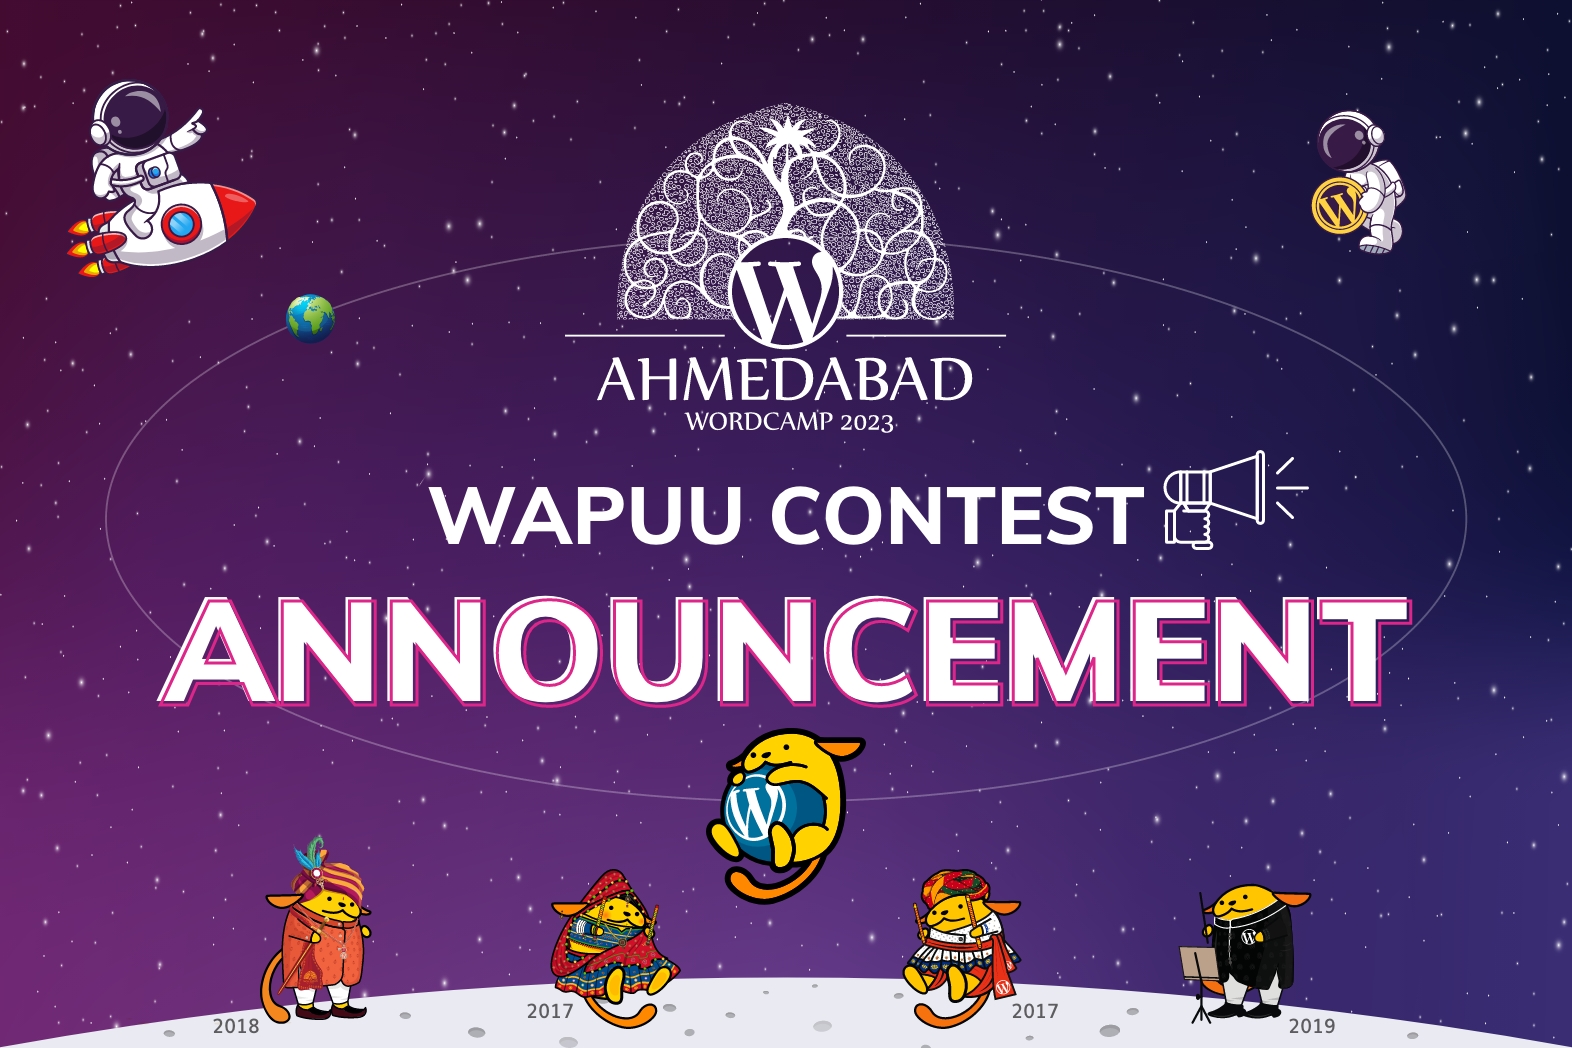 Wapuu contest announcement